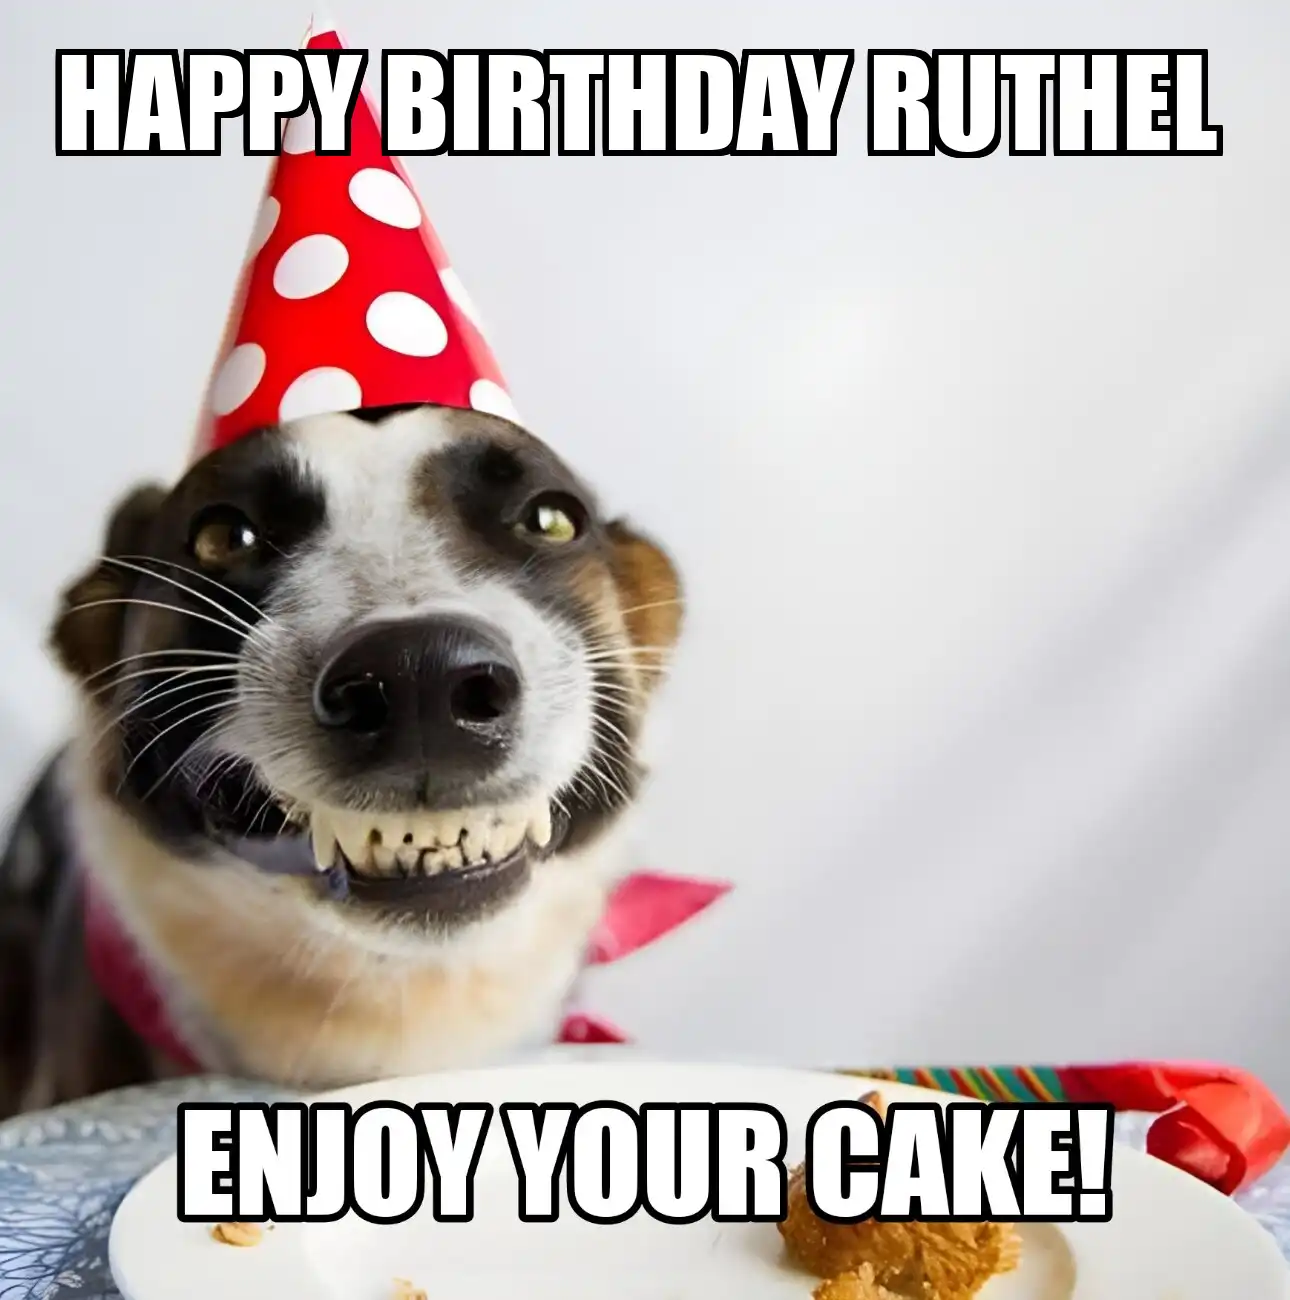 Happy Birthday Ruthel Enjoy Your Cake Dog Meme